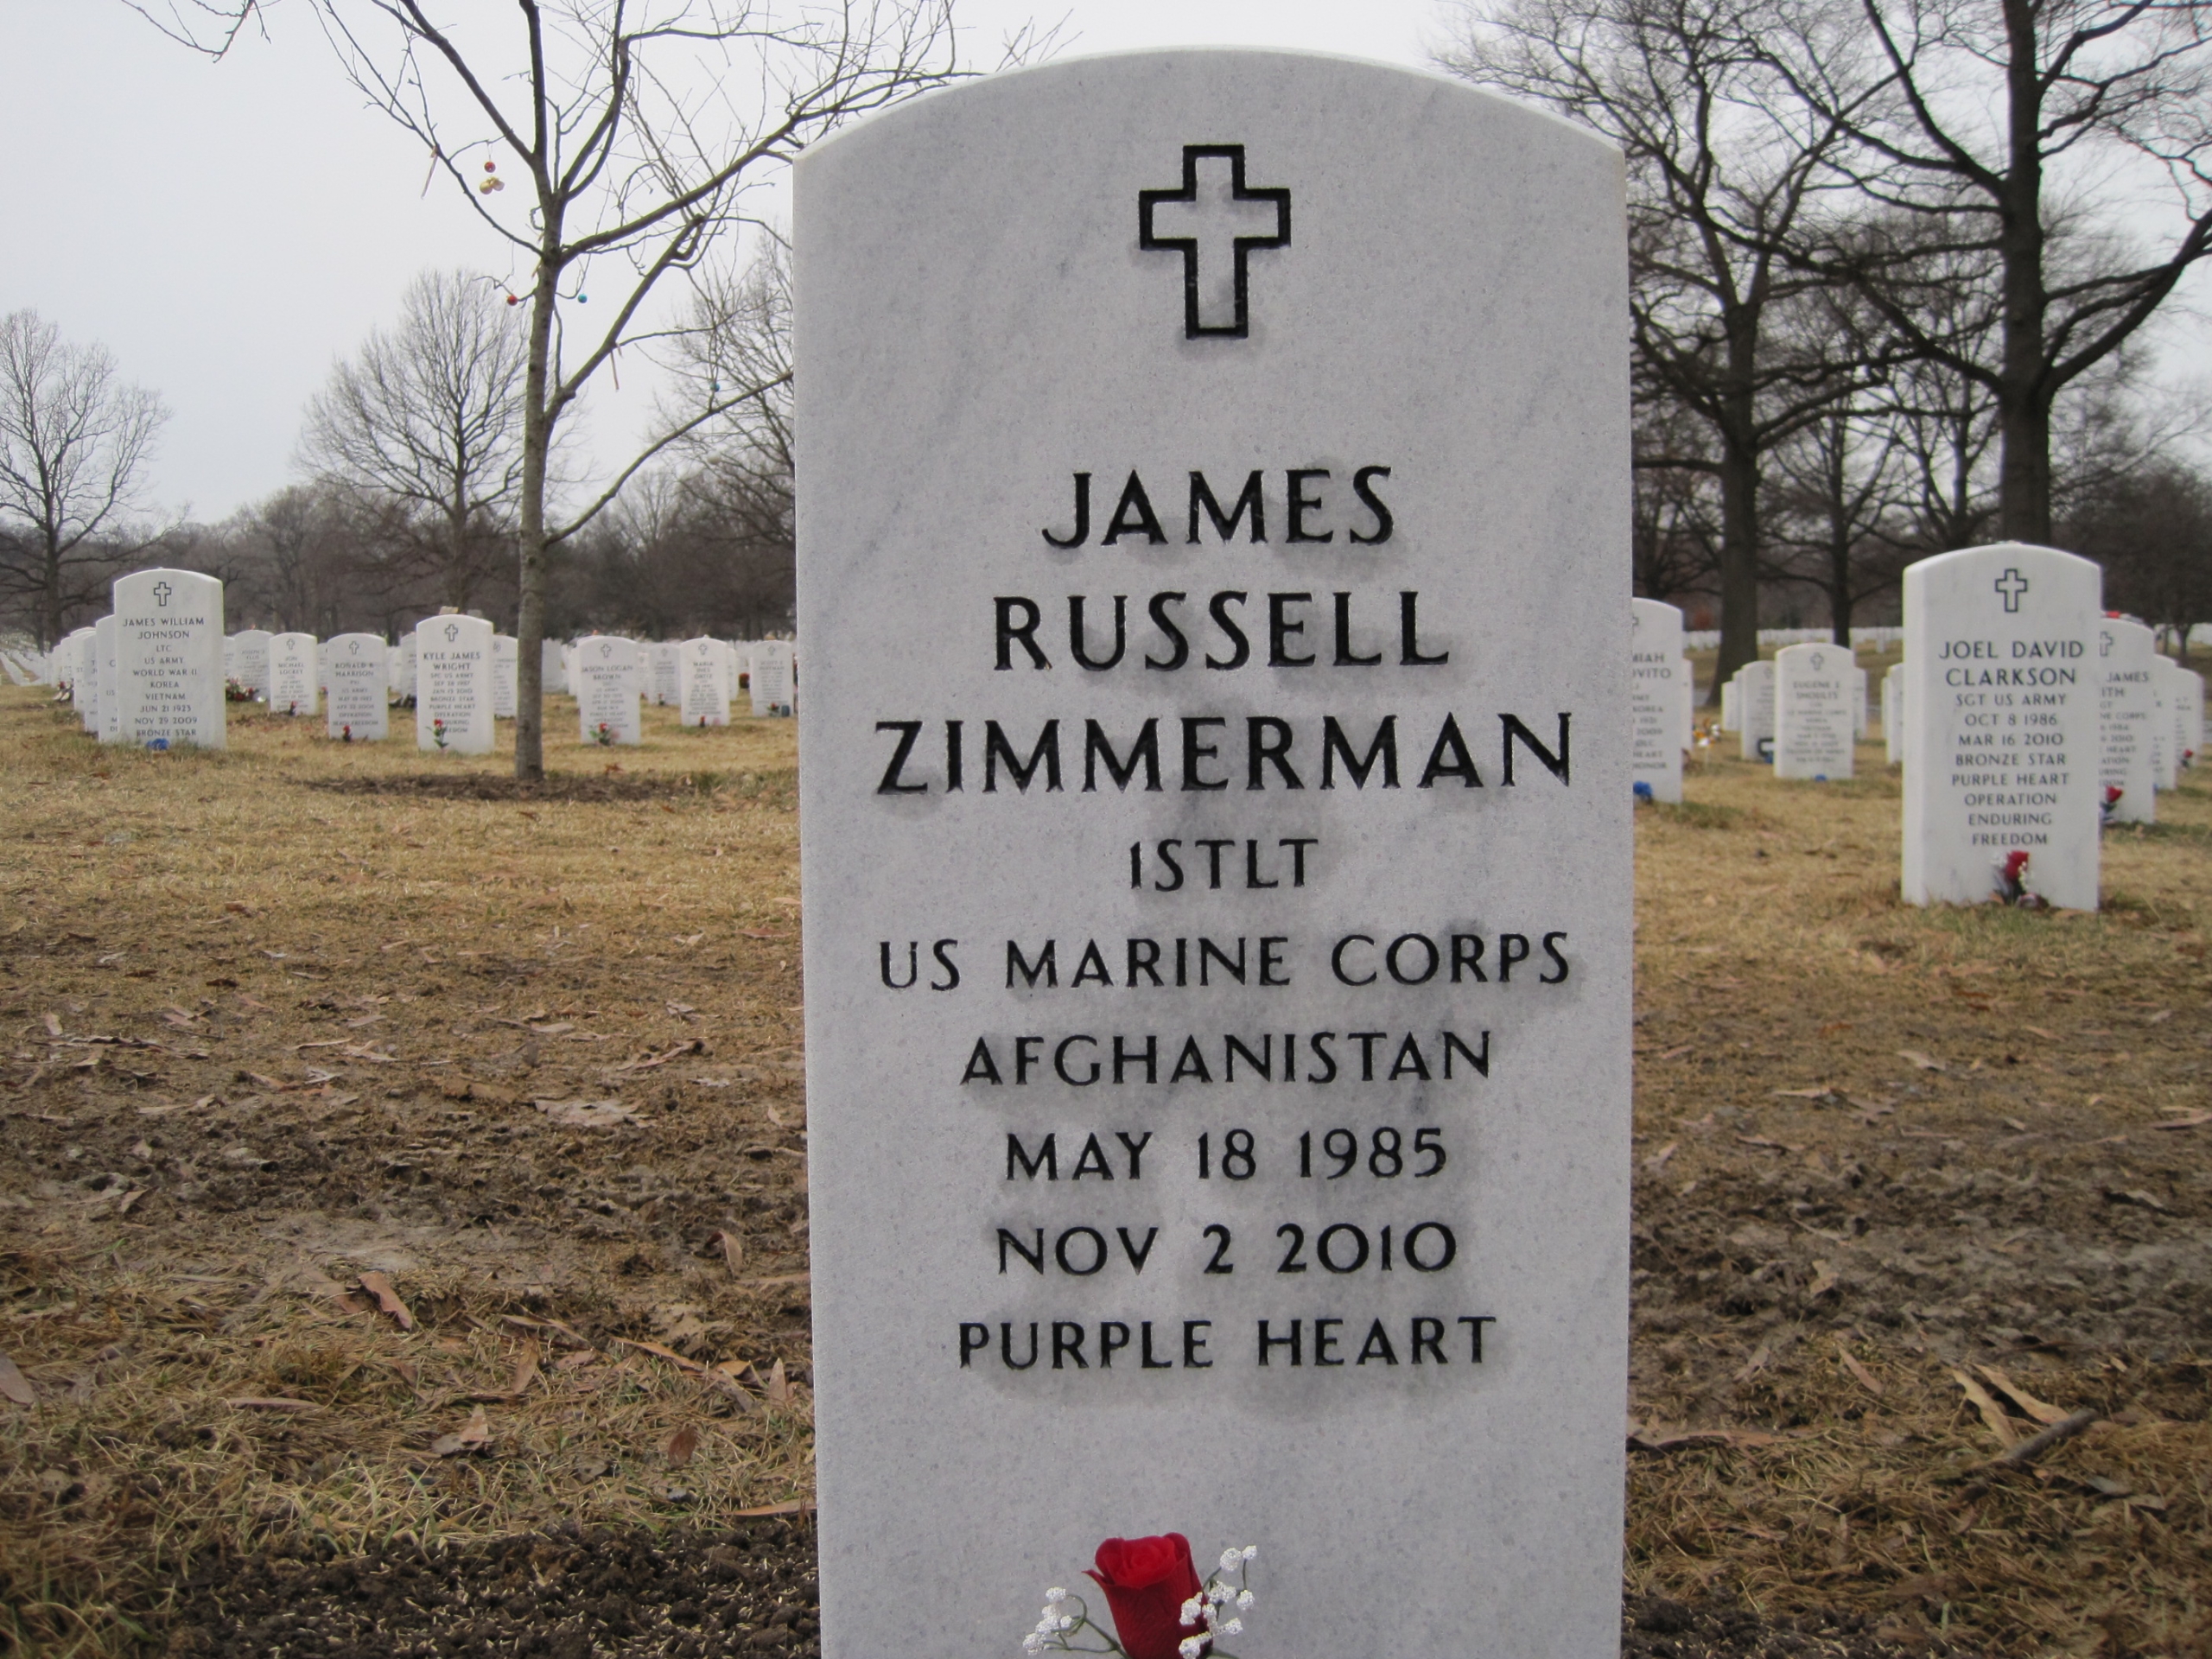 jrzimmerman-gravesite-photo-by-eileen-horan-february-2010-002